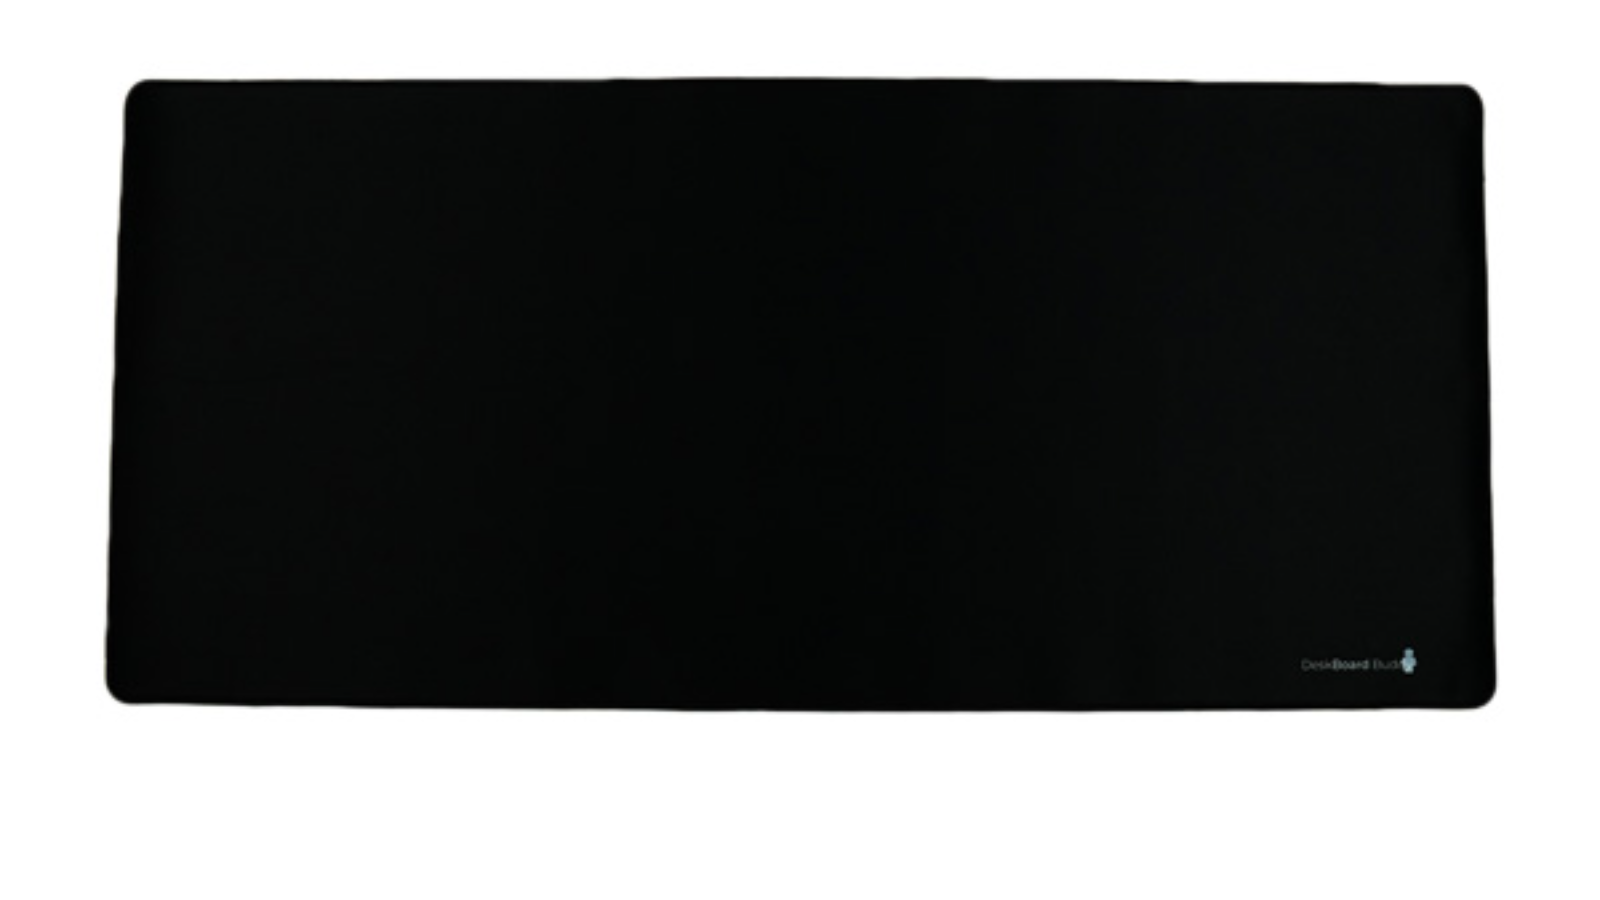 DeskBoard Buddy Mouse Pad - Black: Extra Large Size